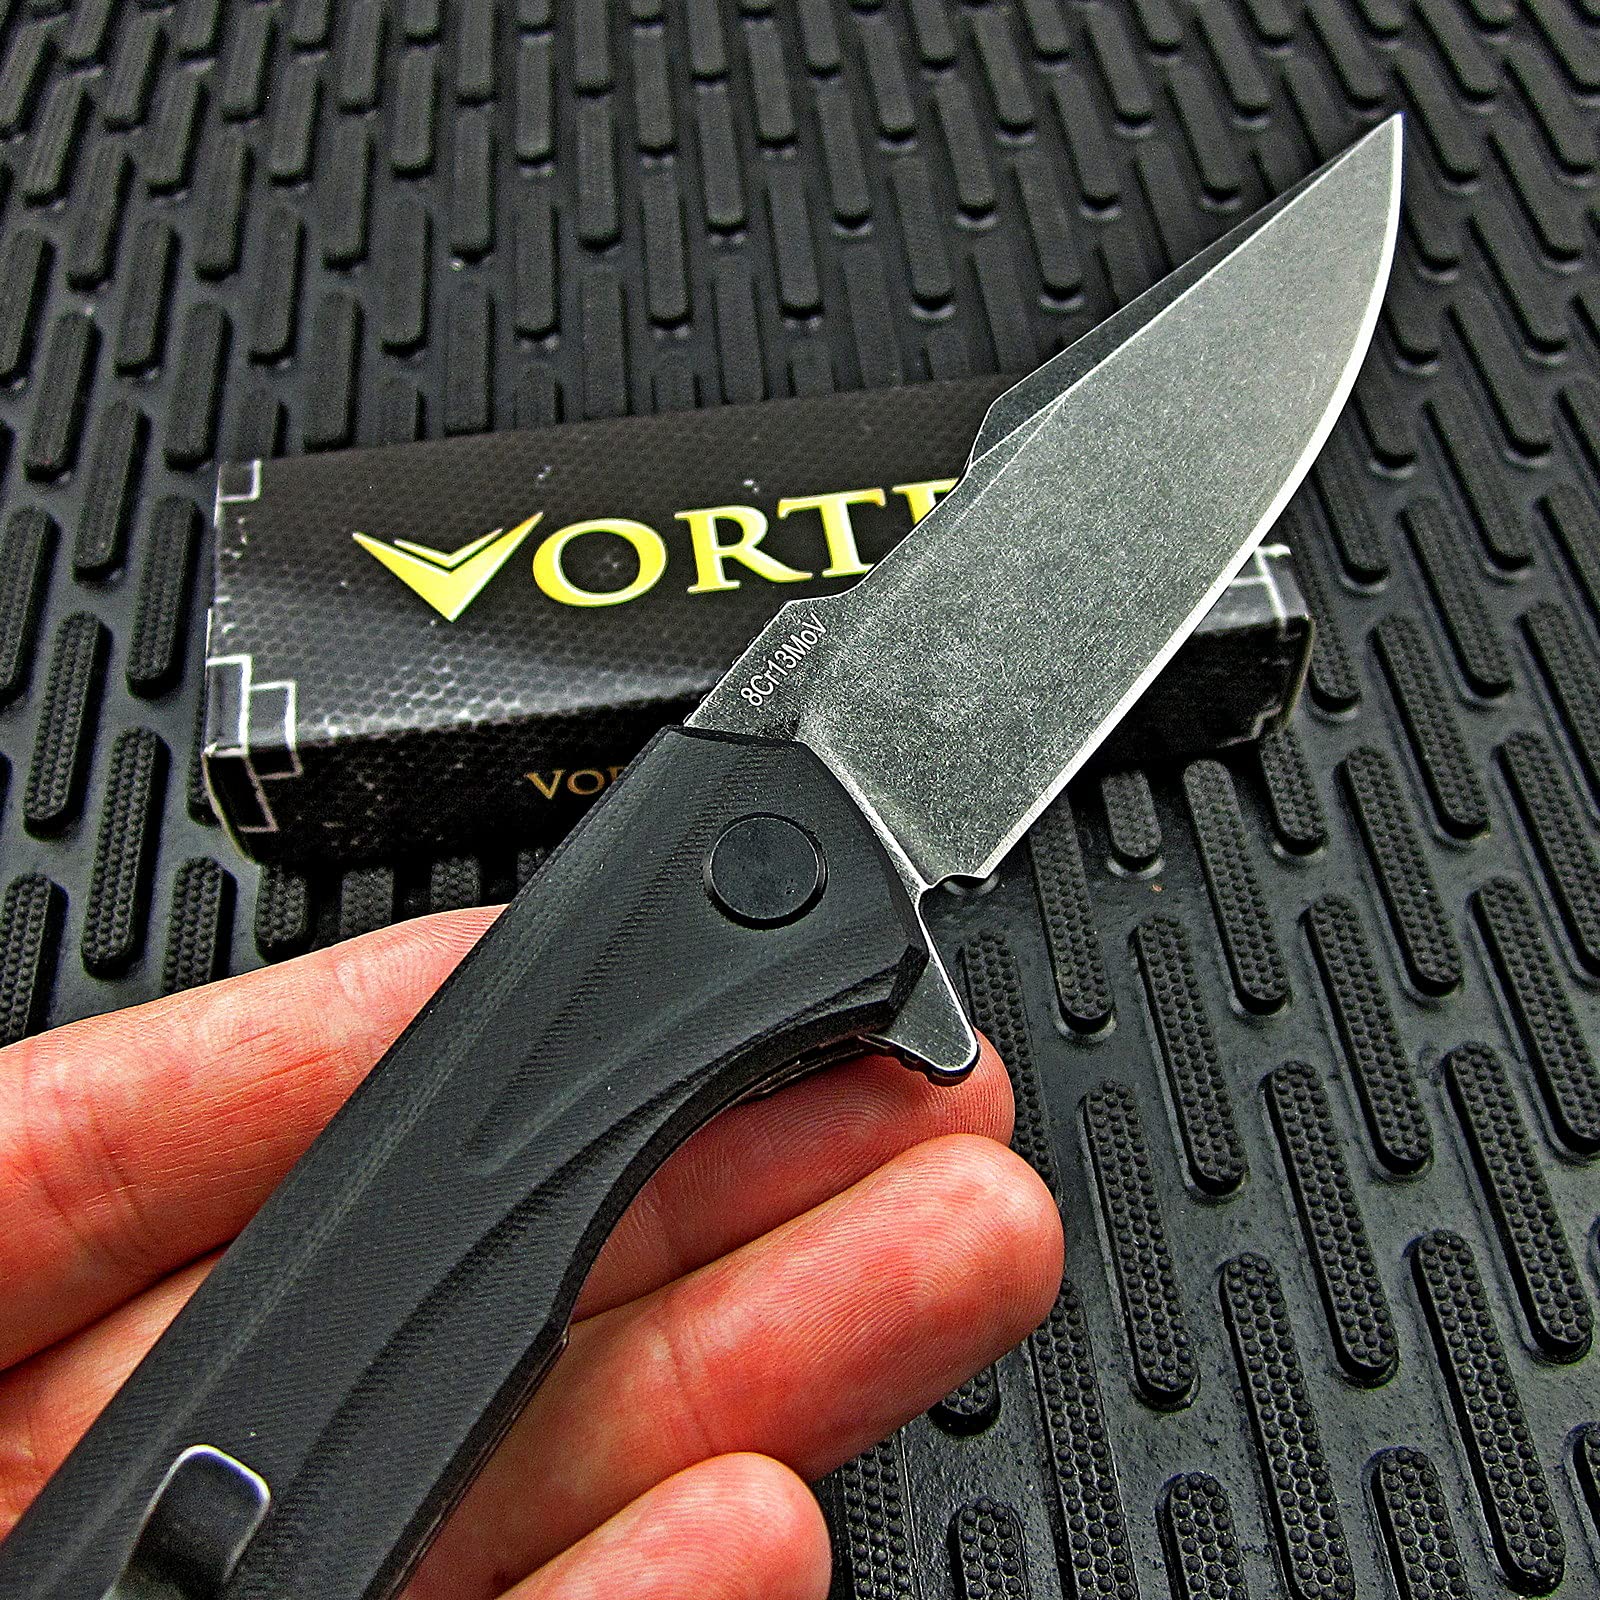 VORTEK DropShot EDC Folding Pocket Knife: Ball Bearing Pivot, 8Cr13MoV Blade, Deep Carry Pocket Clip, Smooth Fast Everyday